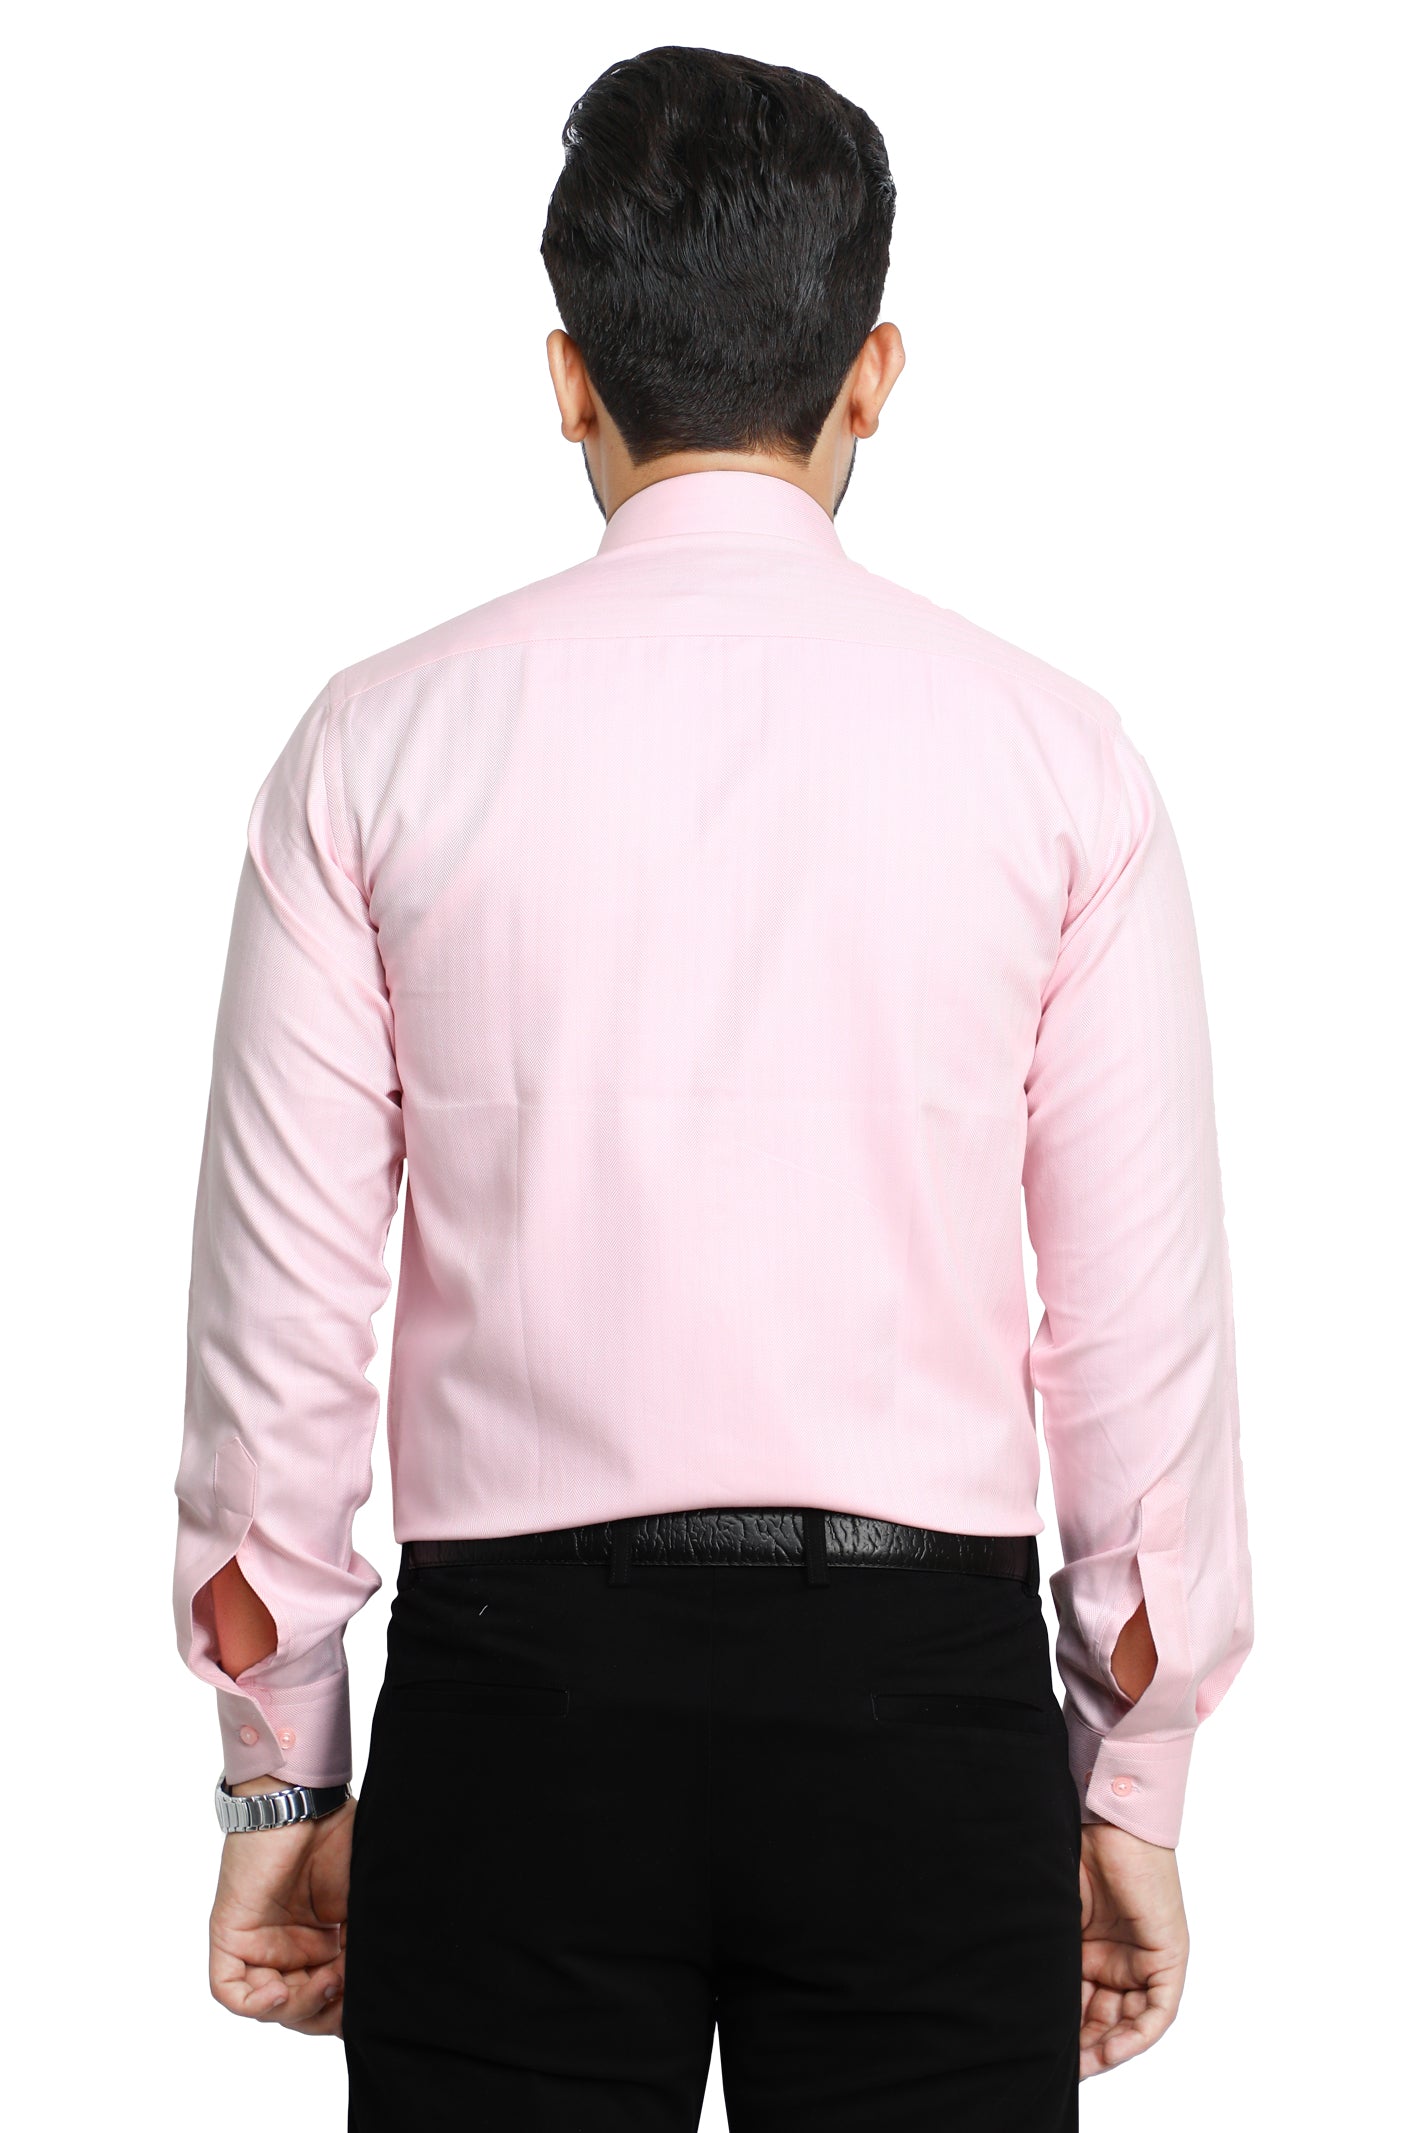 Formal Man Shirt in Pink SKU: AB19371-PINK - Diners